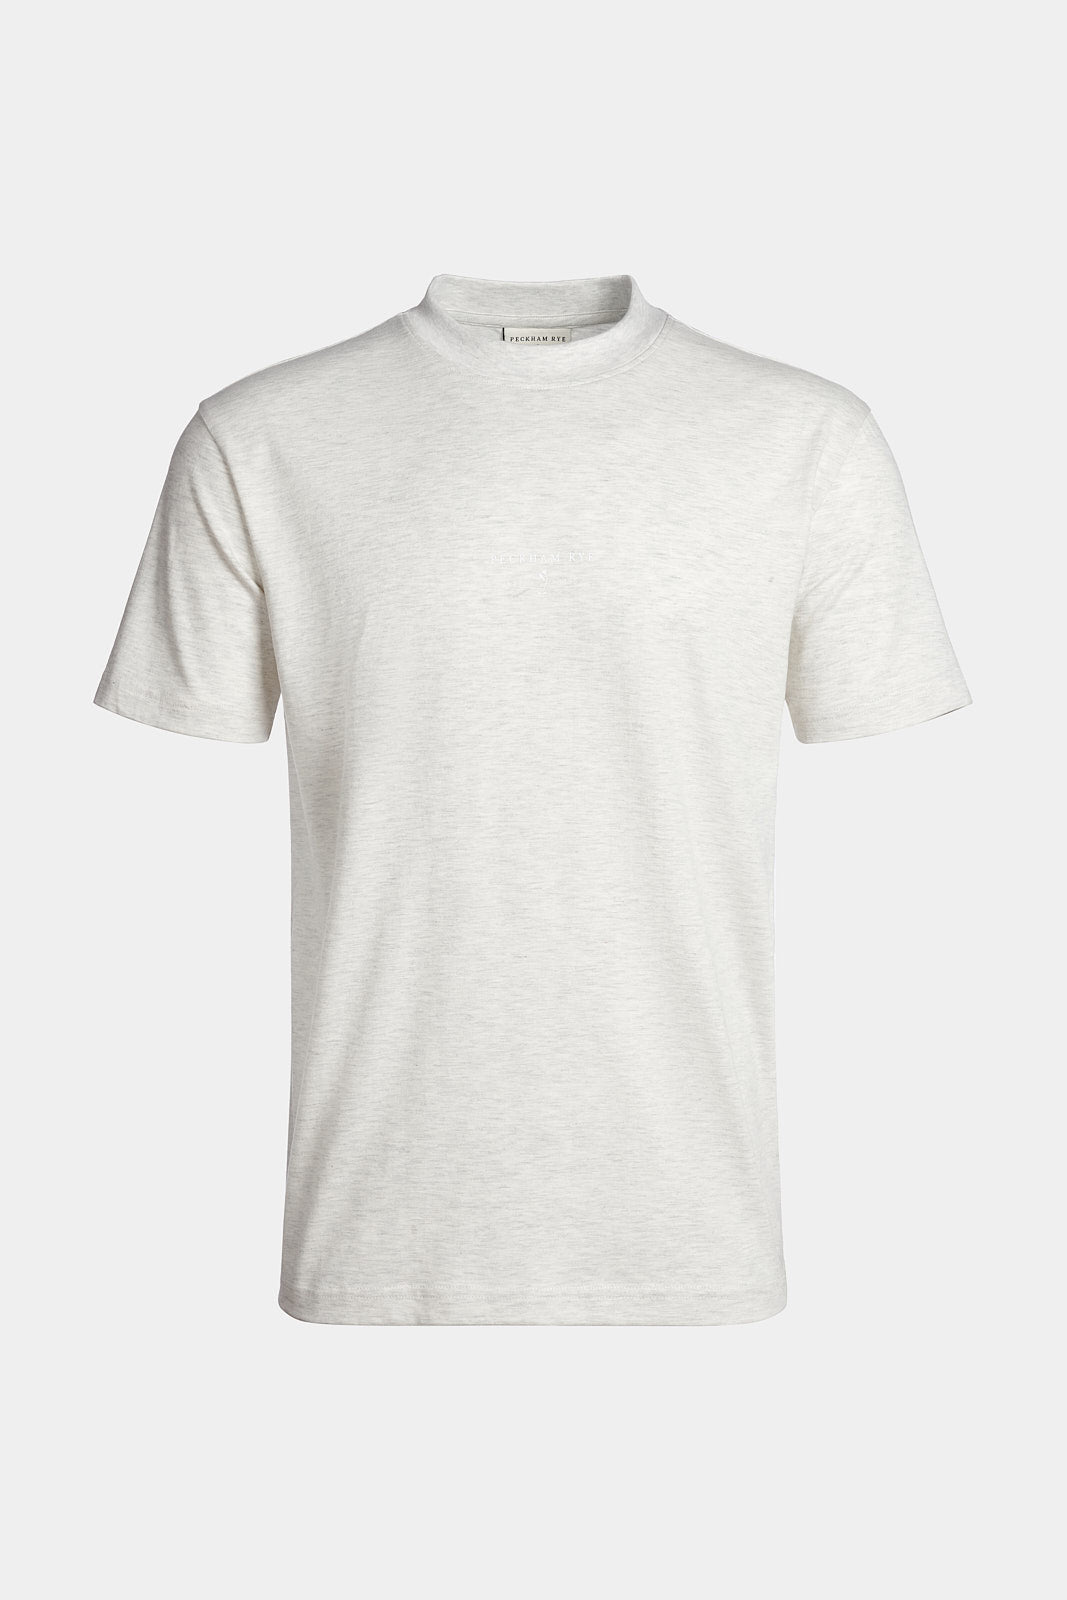 Logo T-Shirt in Grey Marl